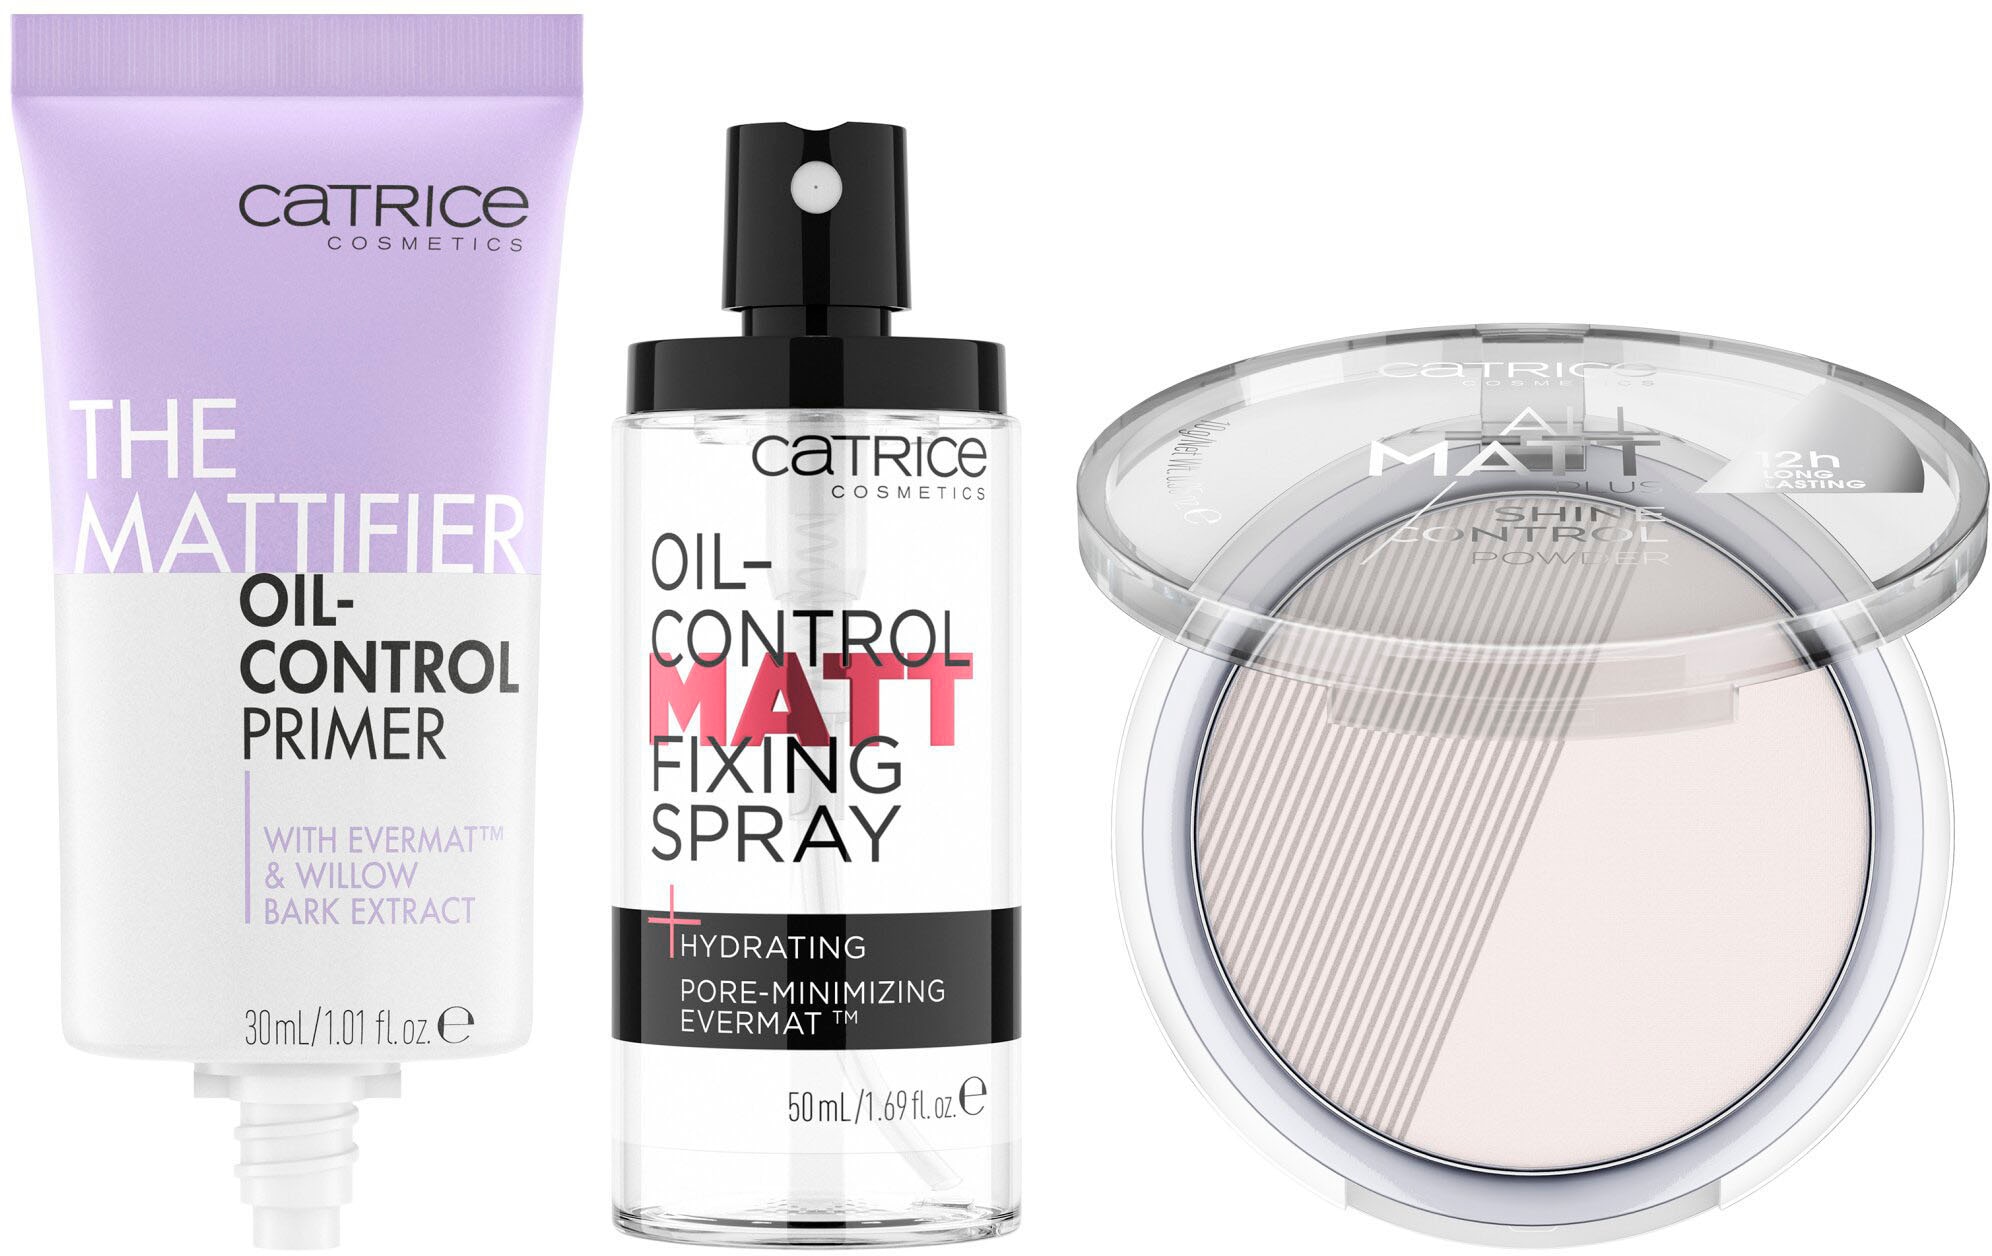 Catrice Make-up Set »The Matte Face Pro Set«, (Set, 3 tlg.) bestellen |  UNIVERSAL